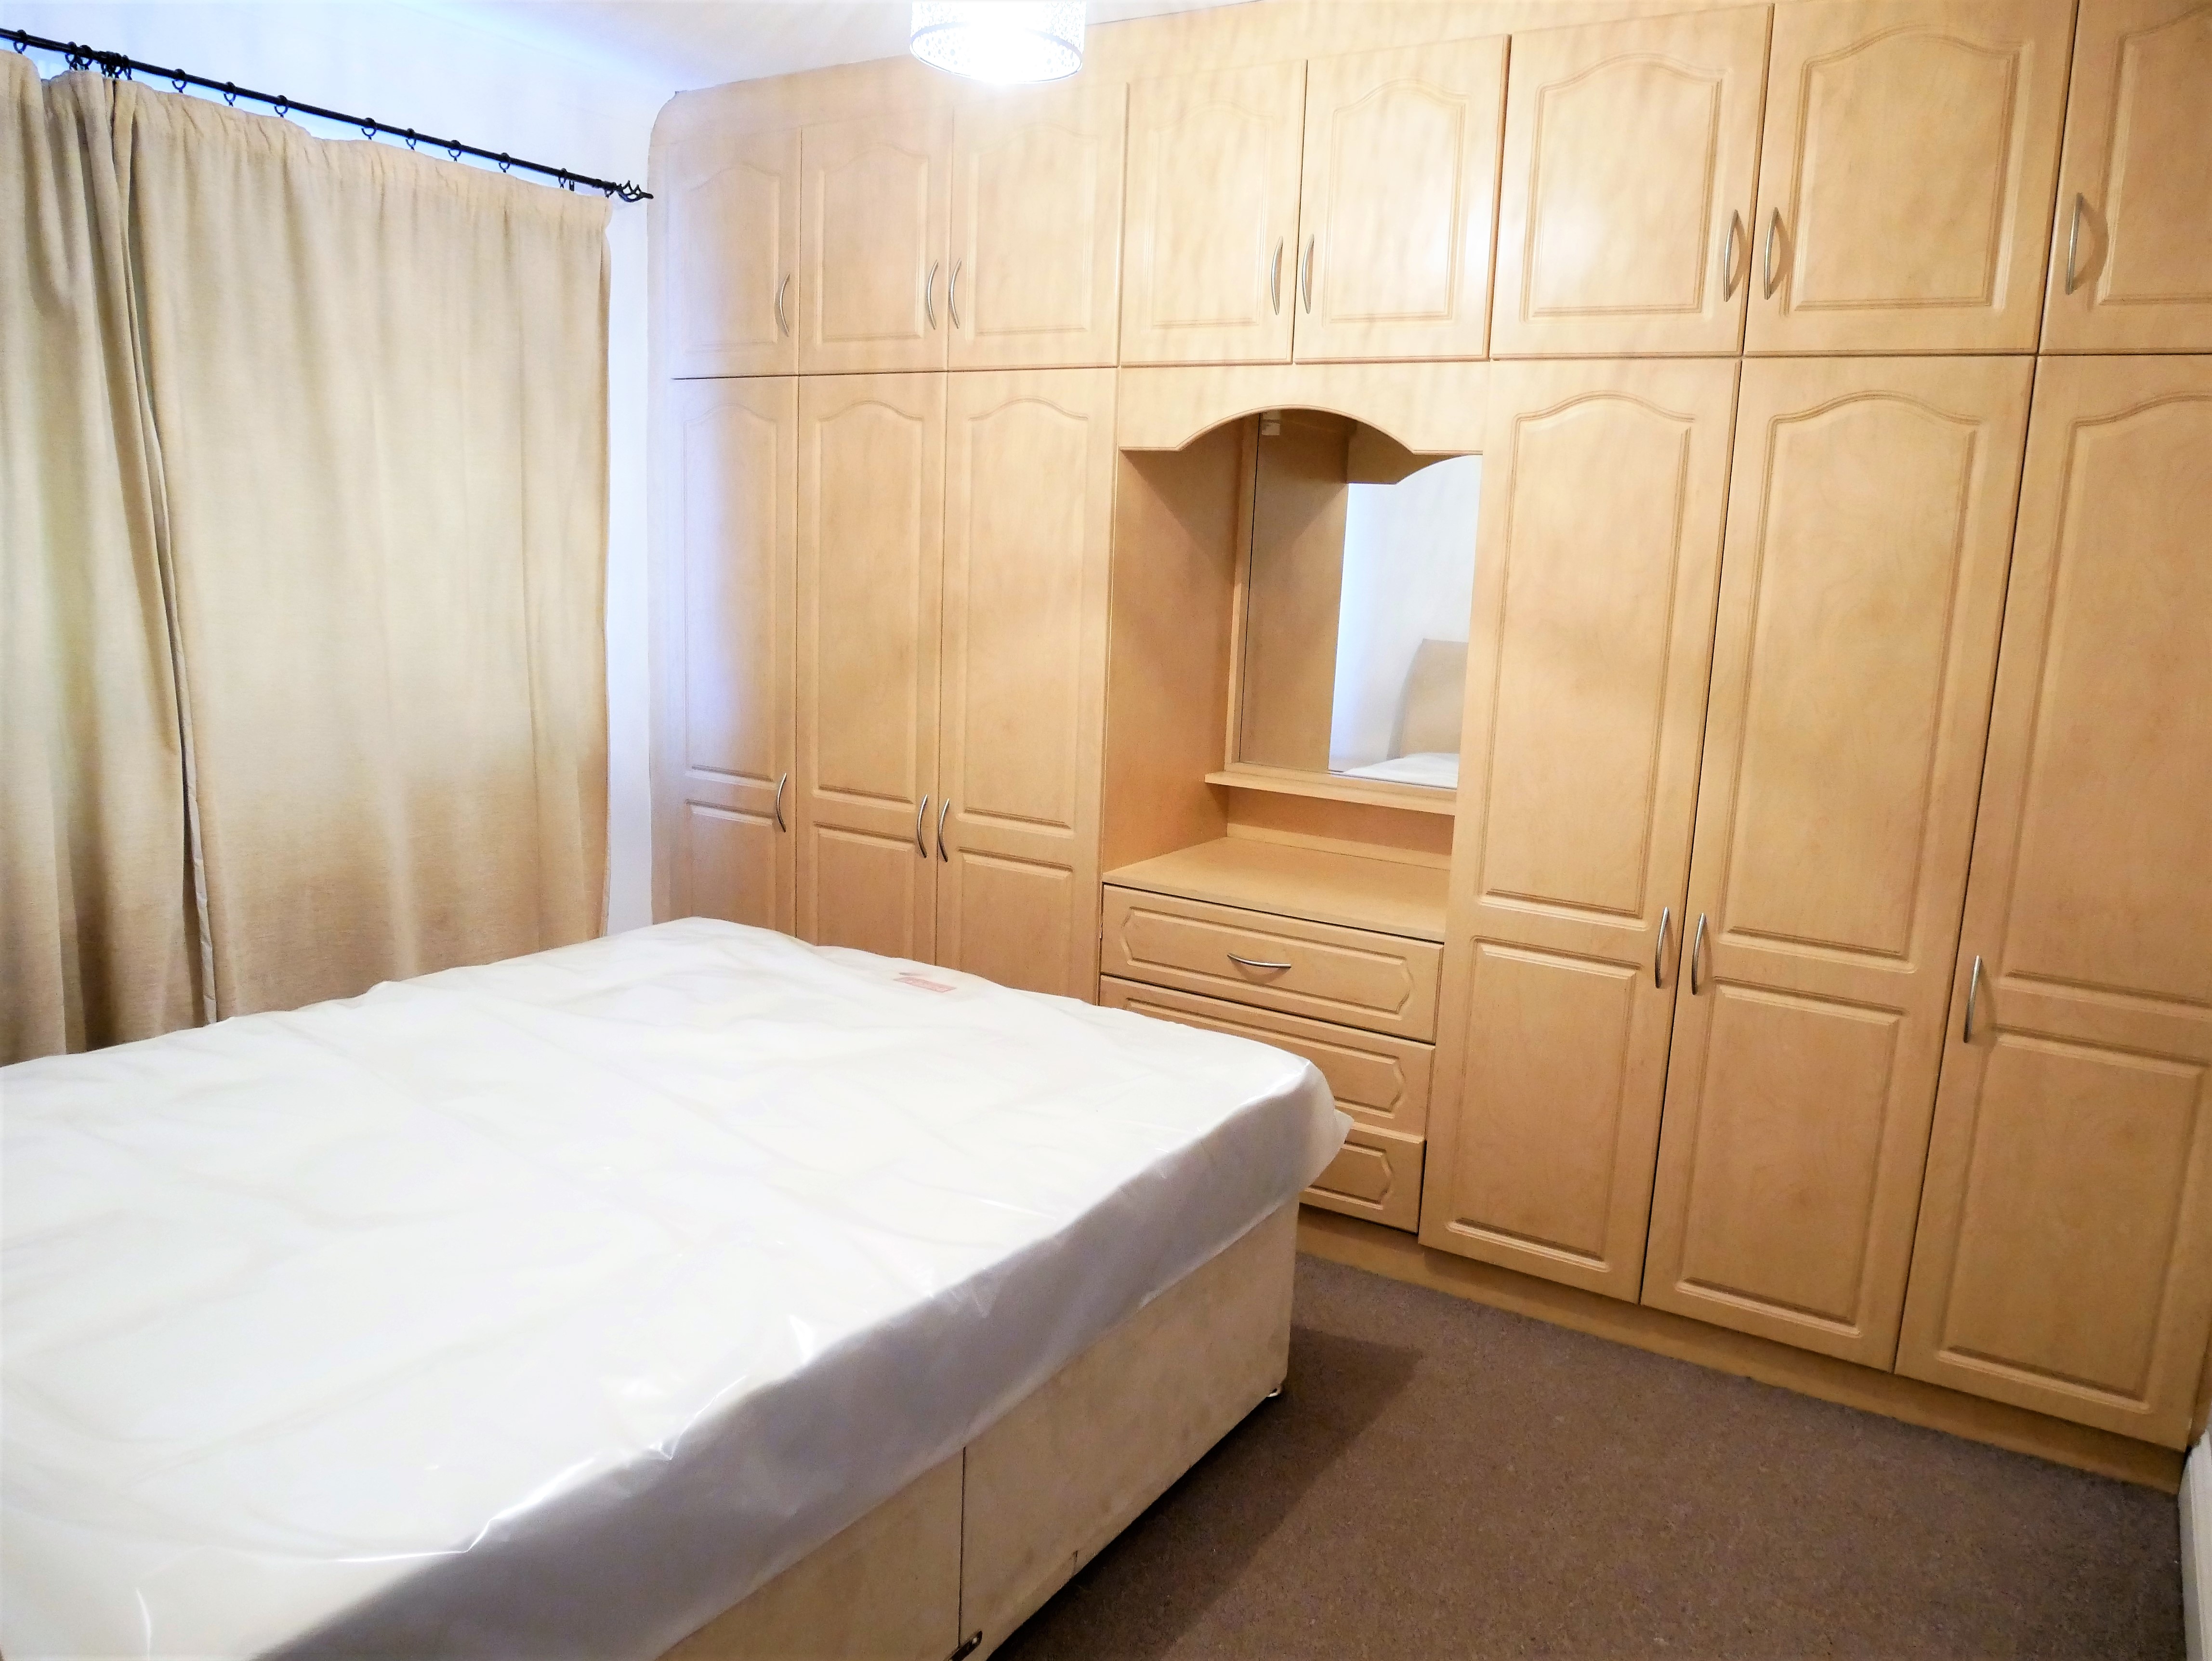 Double bedroom in Great West Road, Isleworth.